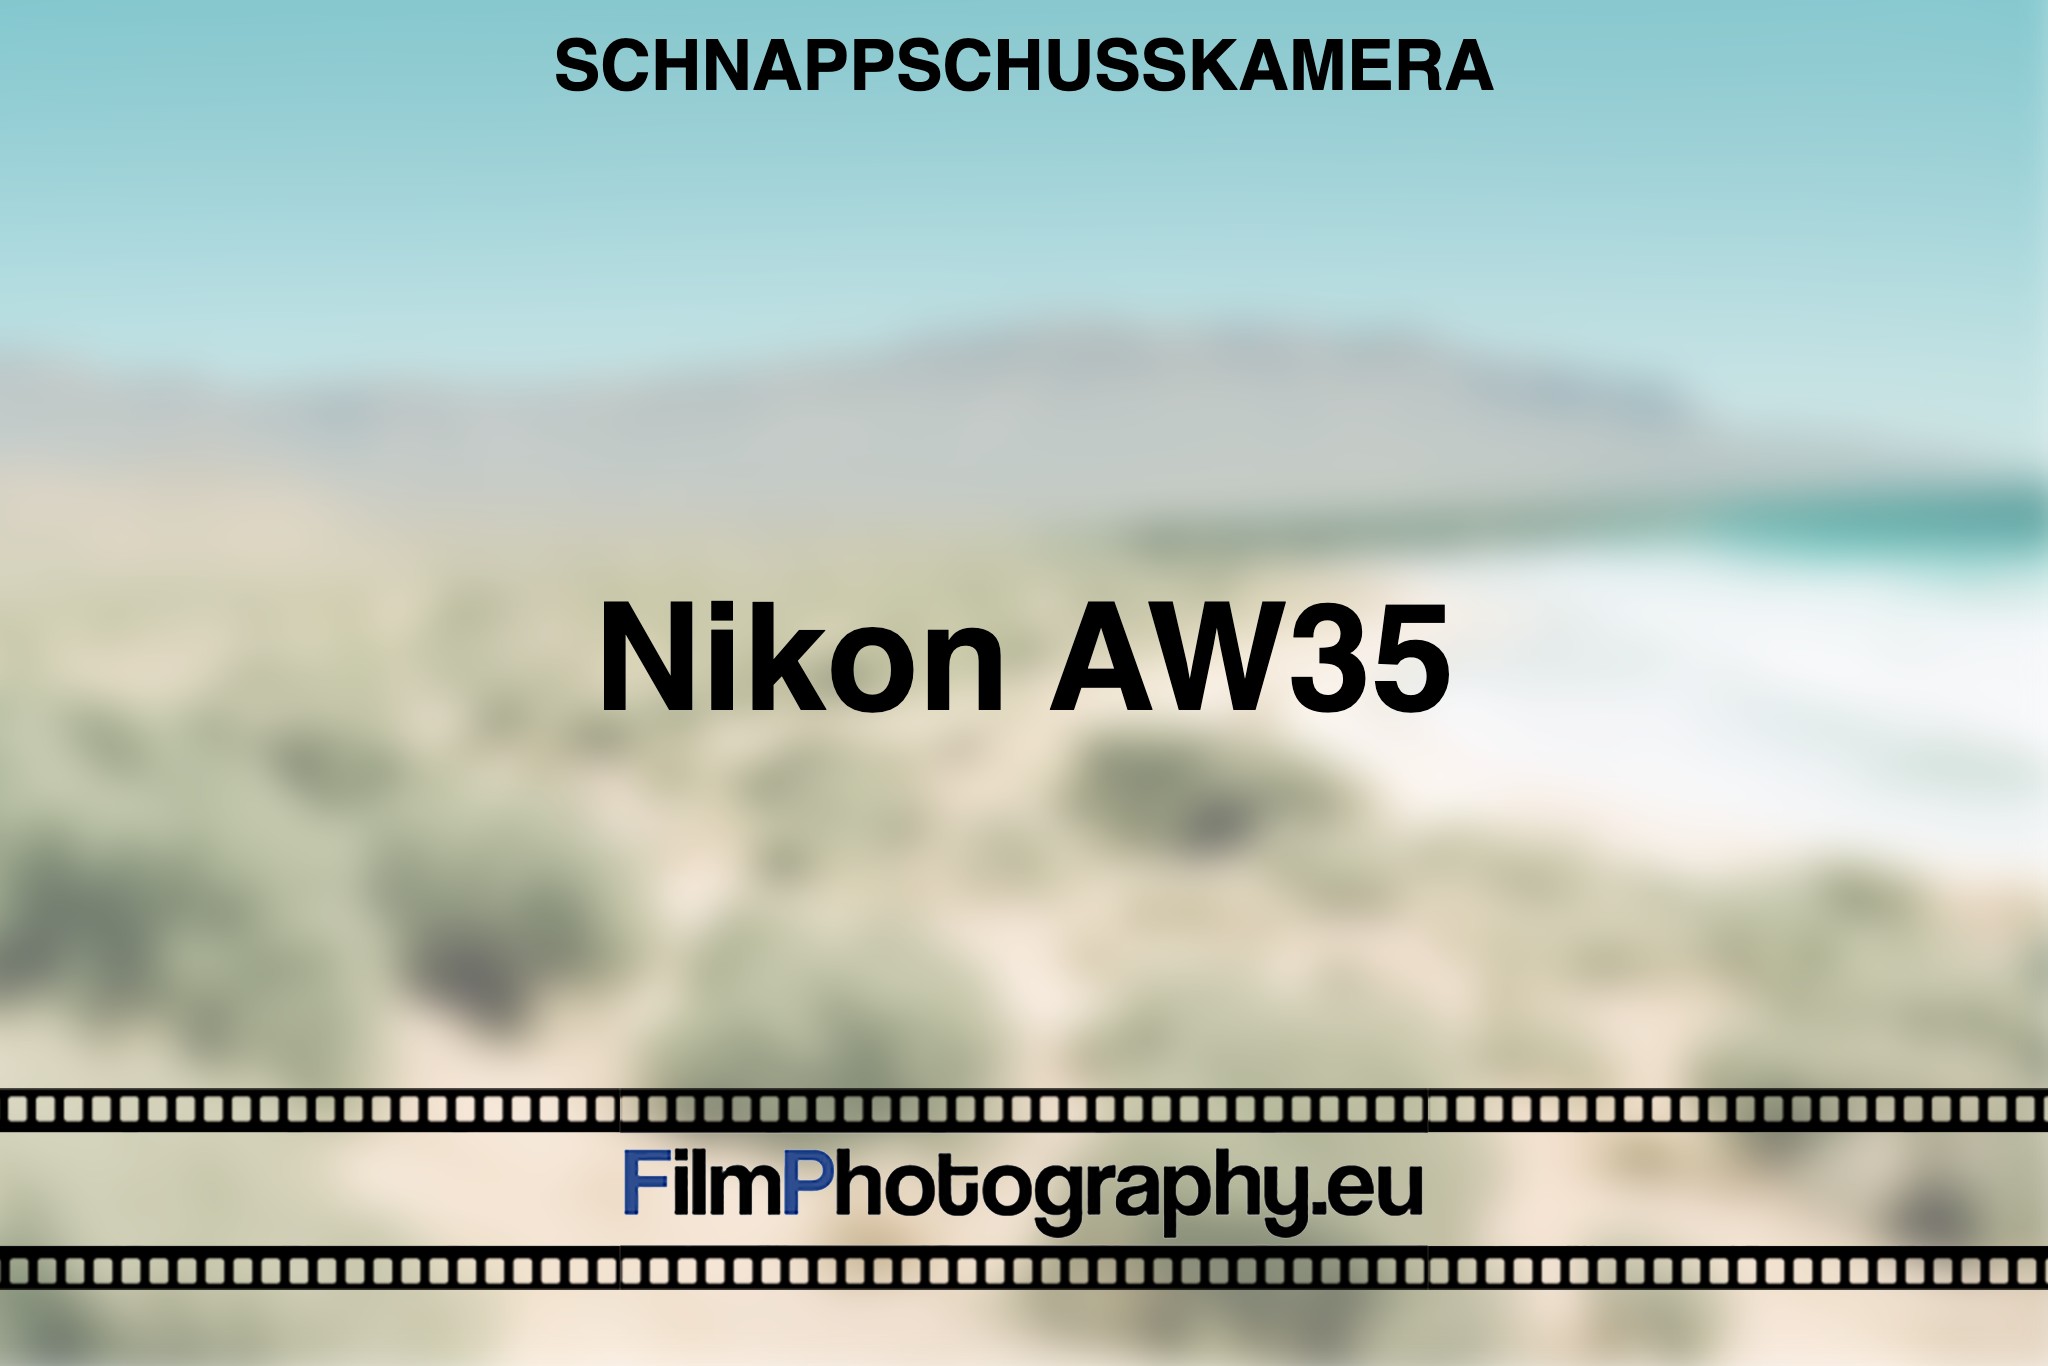 nikon-aw35-schnappschusskamera-bnv